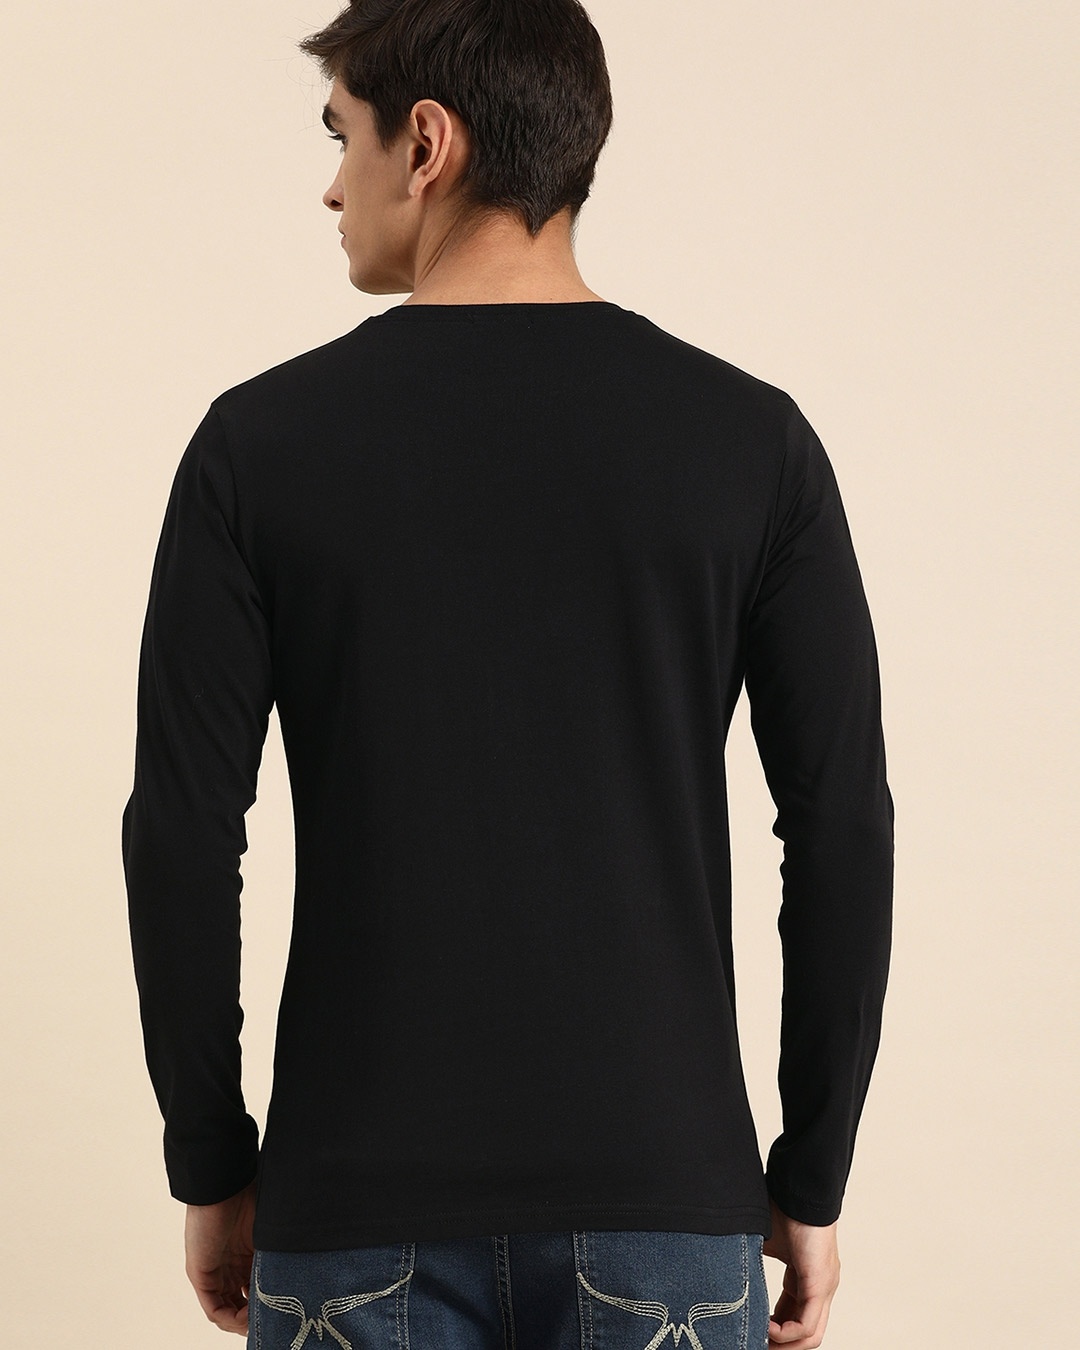 Shop Leader Full Sleeve T-Shirt Black-Design